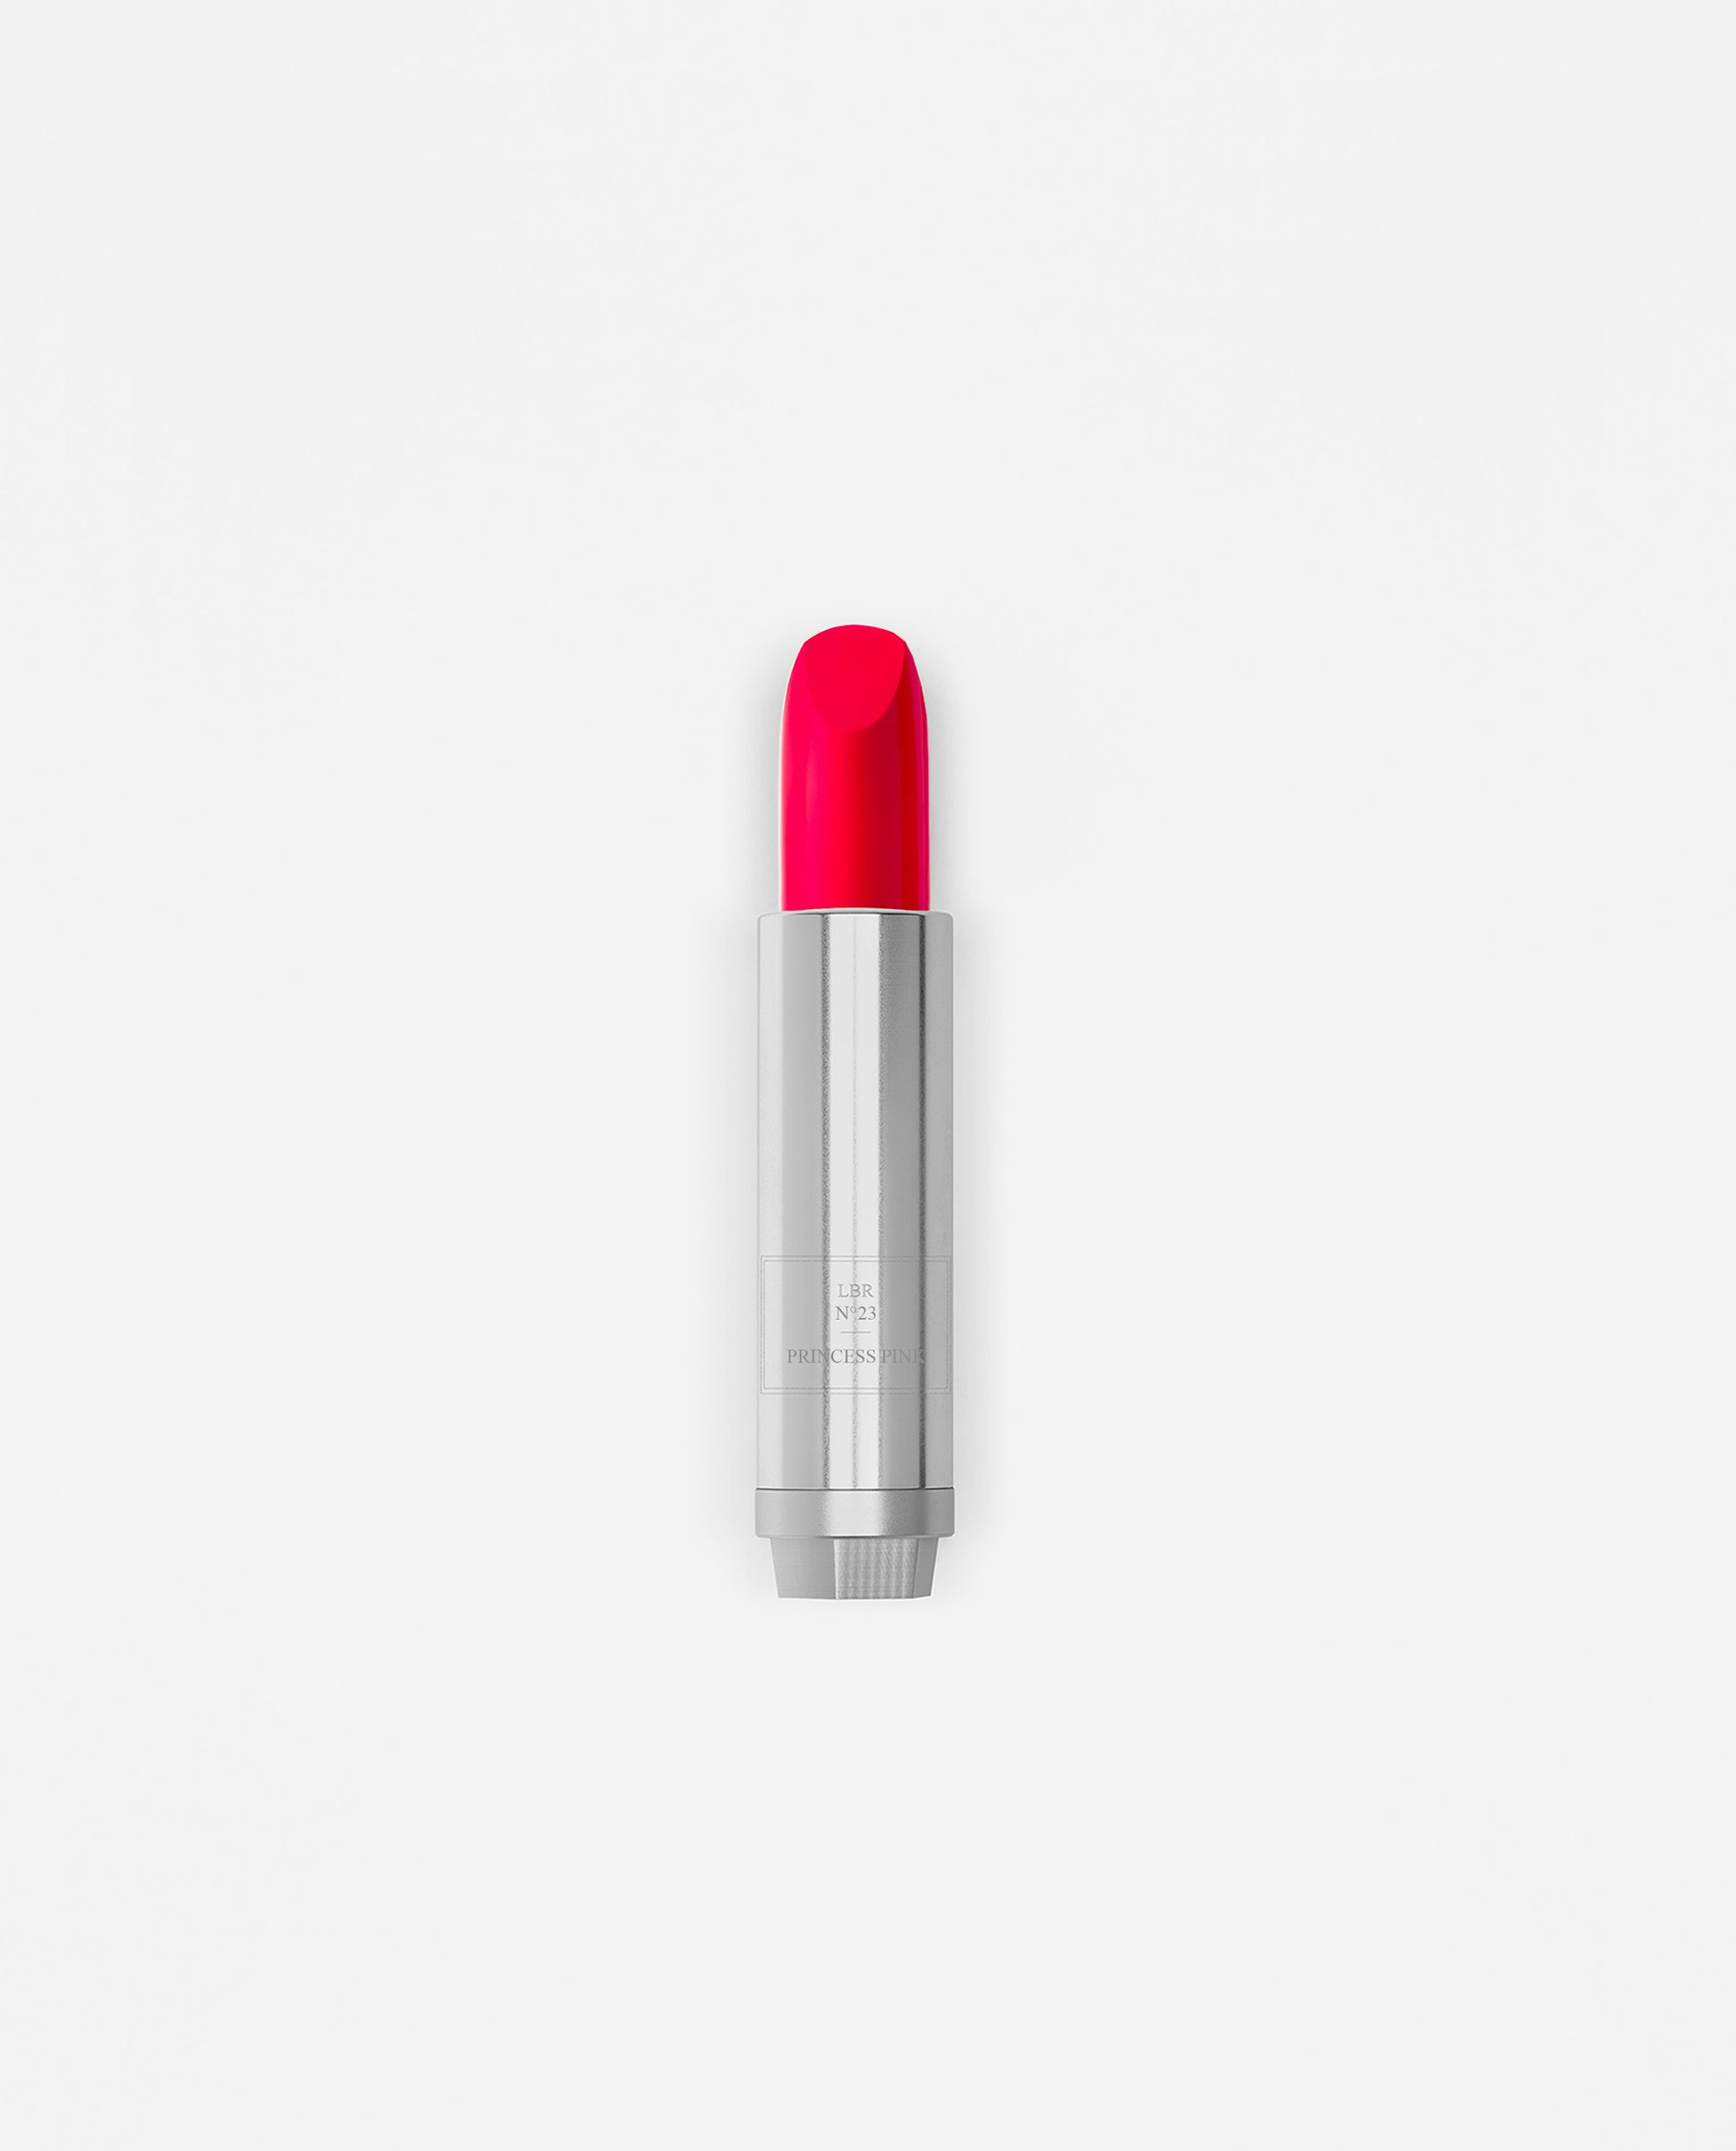 La bouche rouge Princess Pink lipstick in metal refill